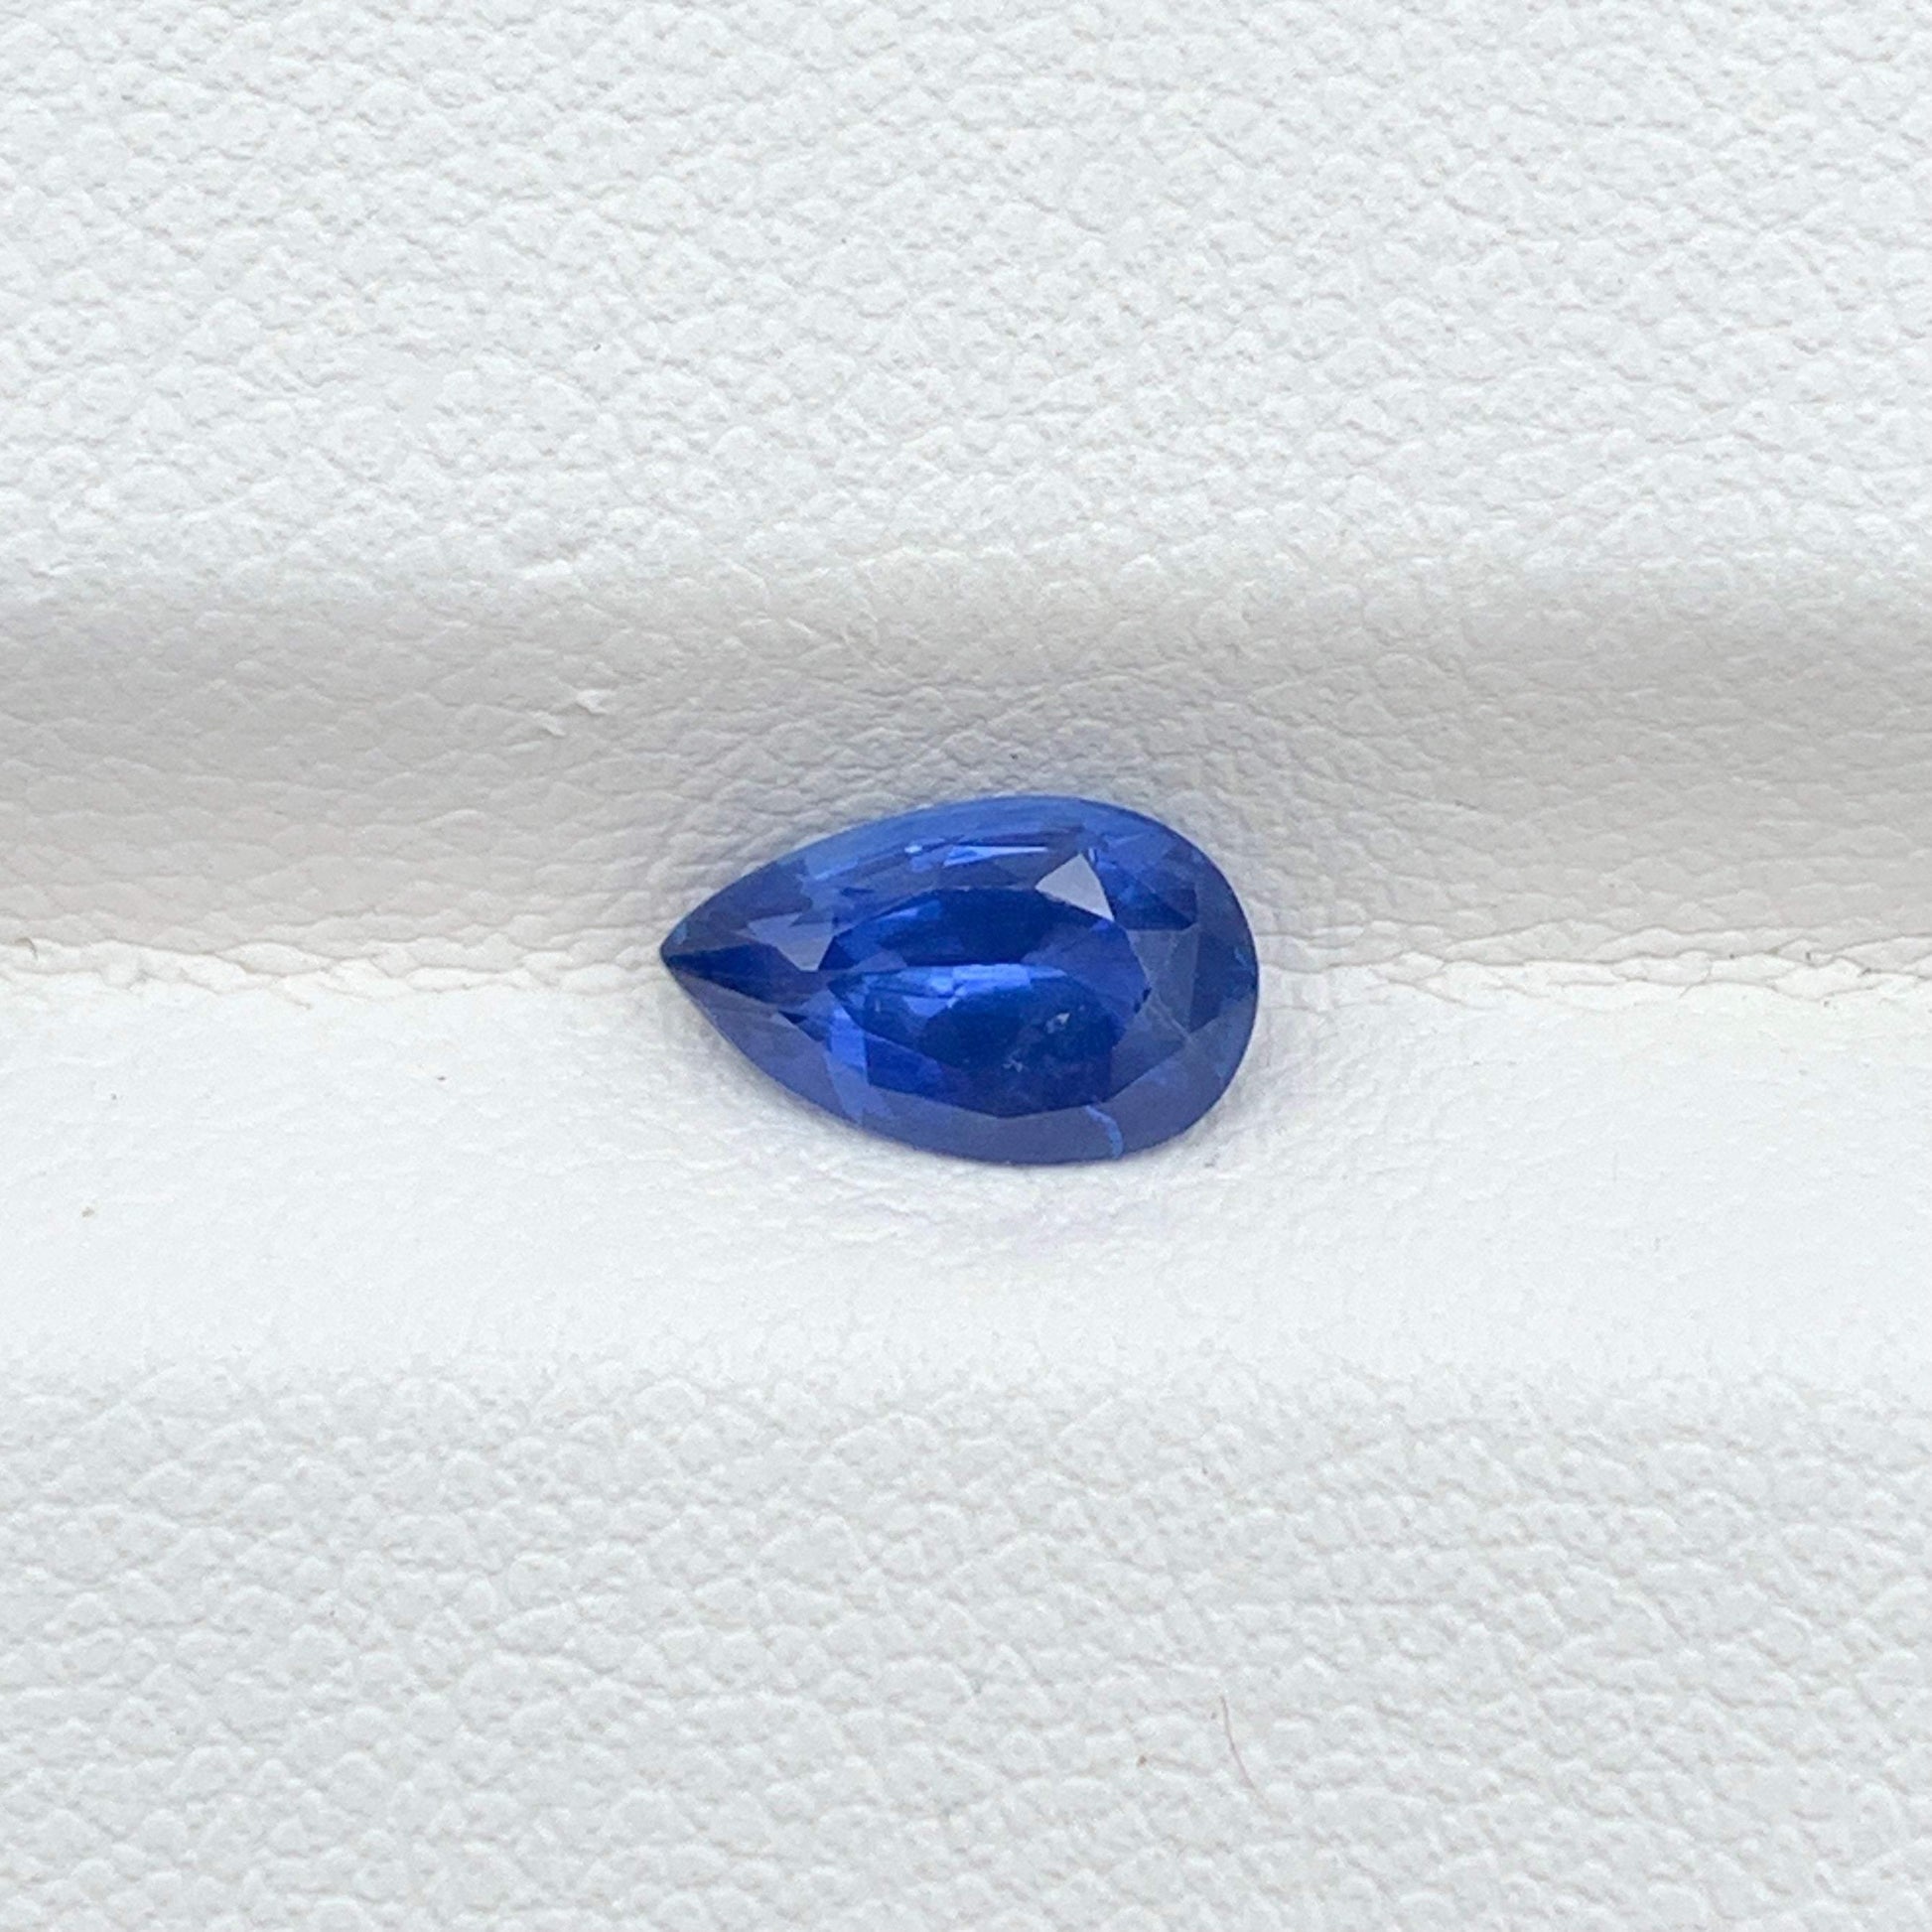 1.15CT Natural Blue Sapphire 